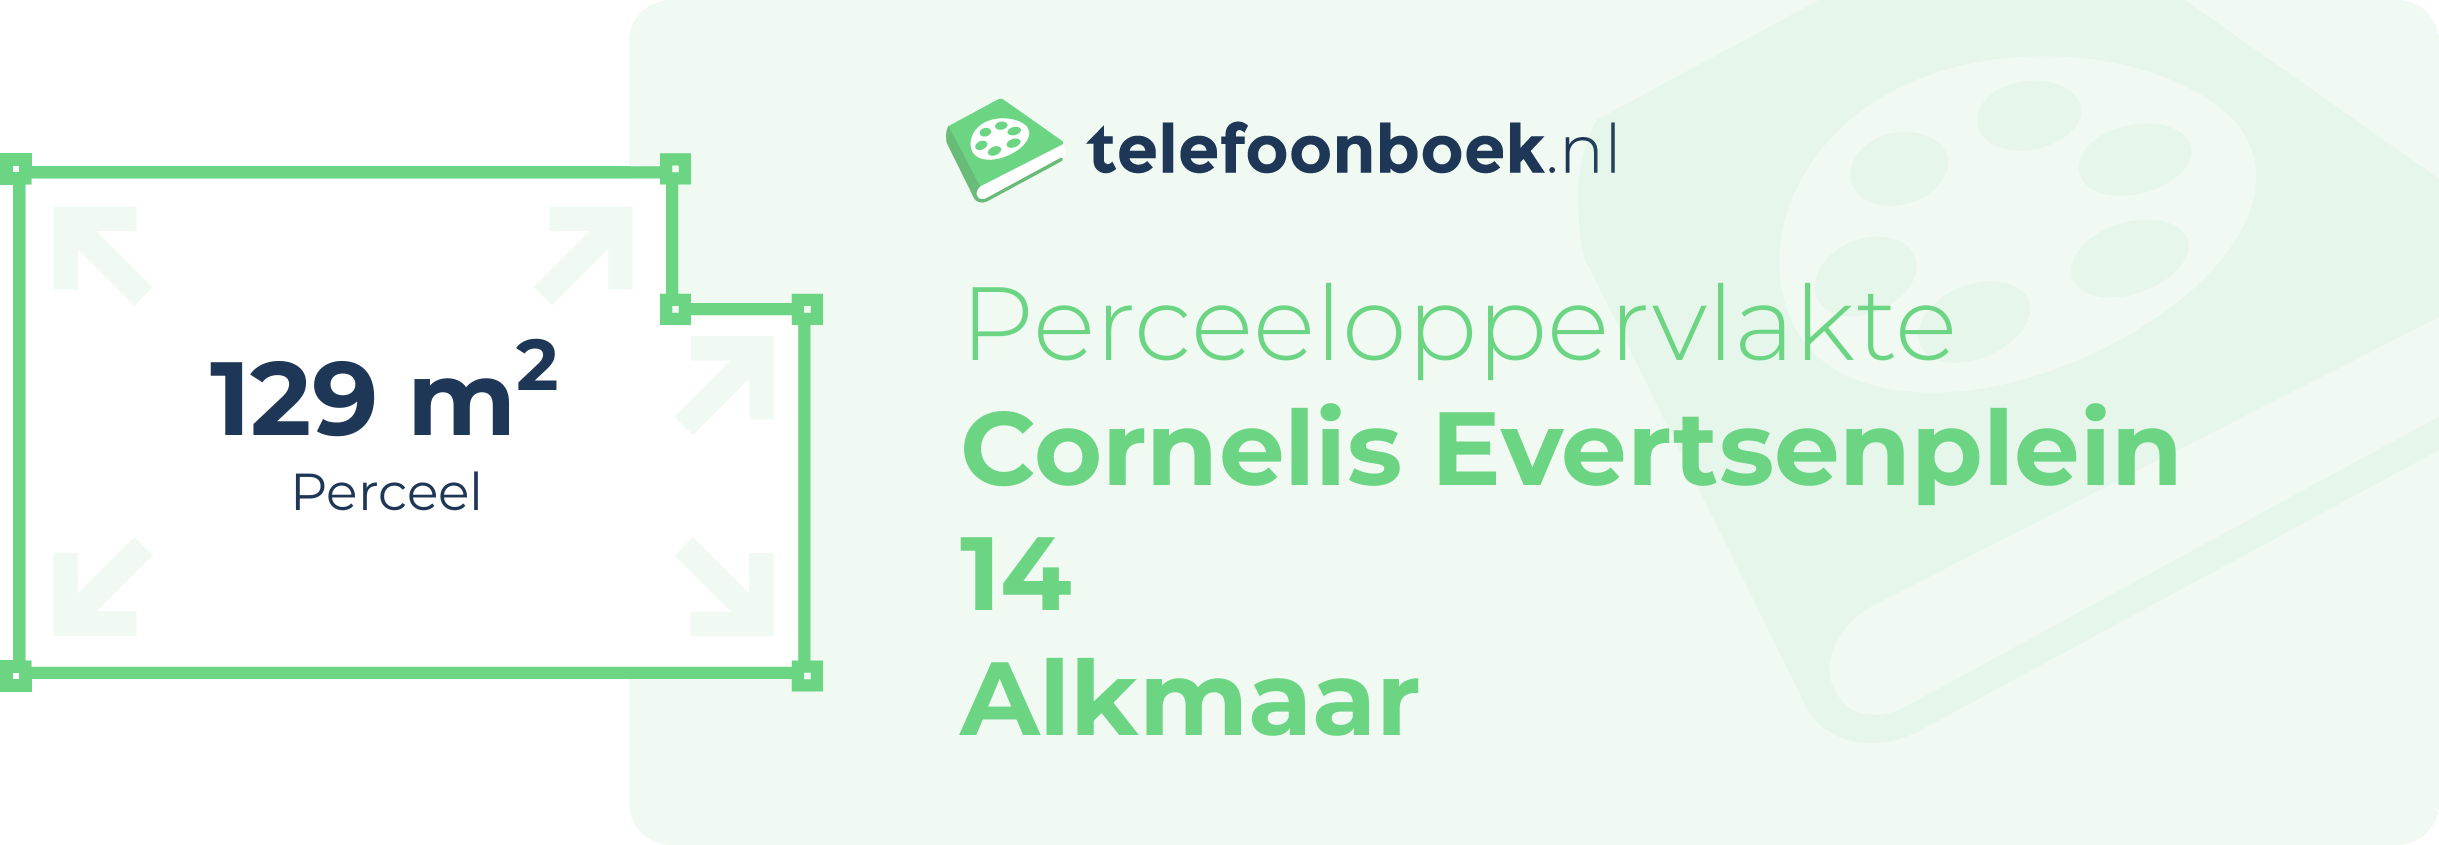 Perceeloppervlakte Cornelis Evertsenplein 14 Alkmaar